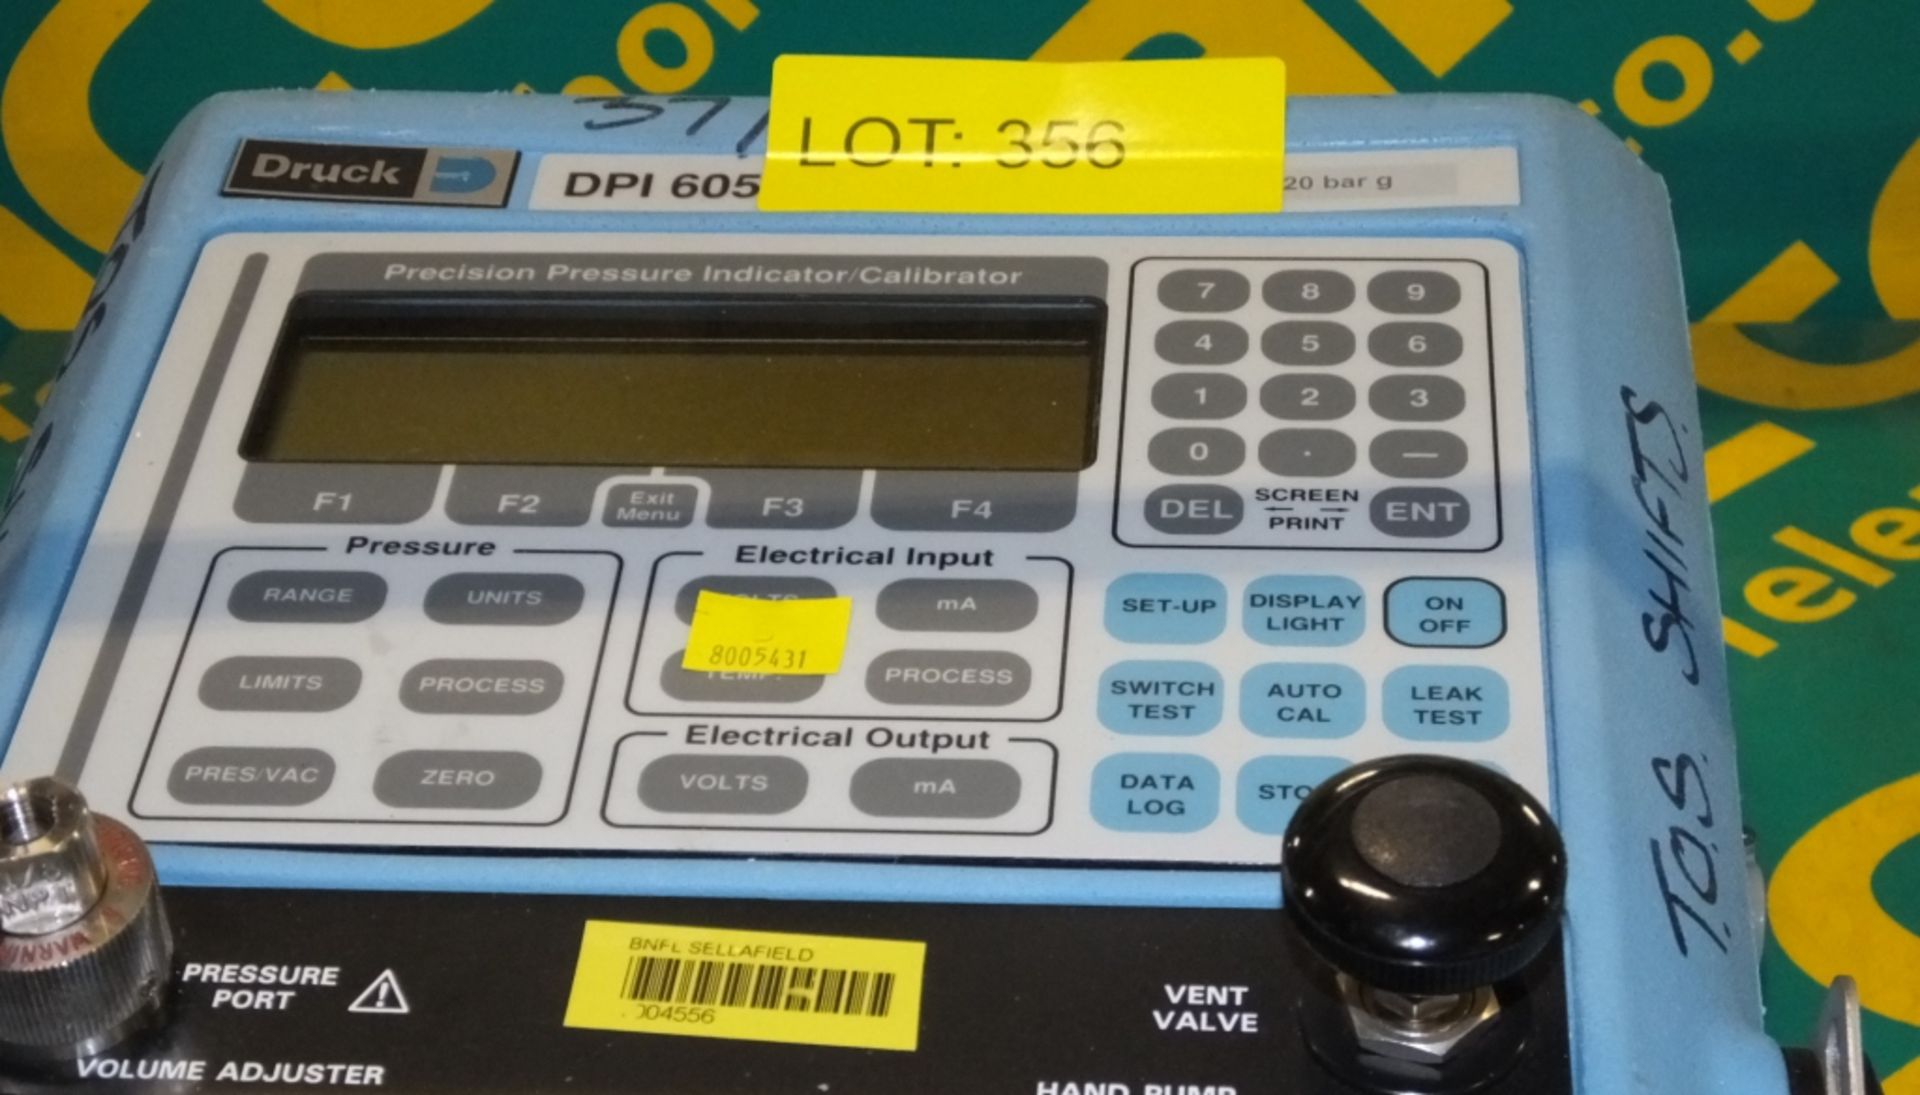 Druck DPI 605 20bar G digital pressure indicator - Image 2 of 3